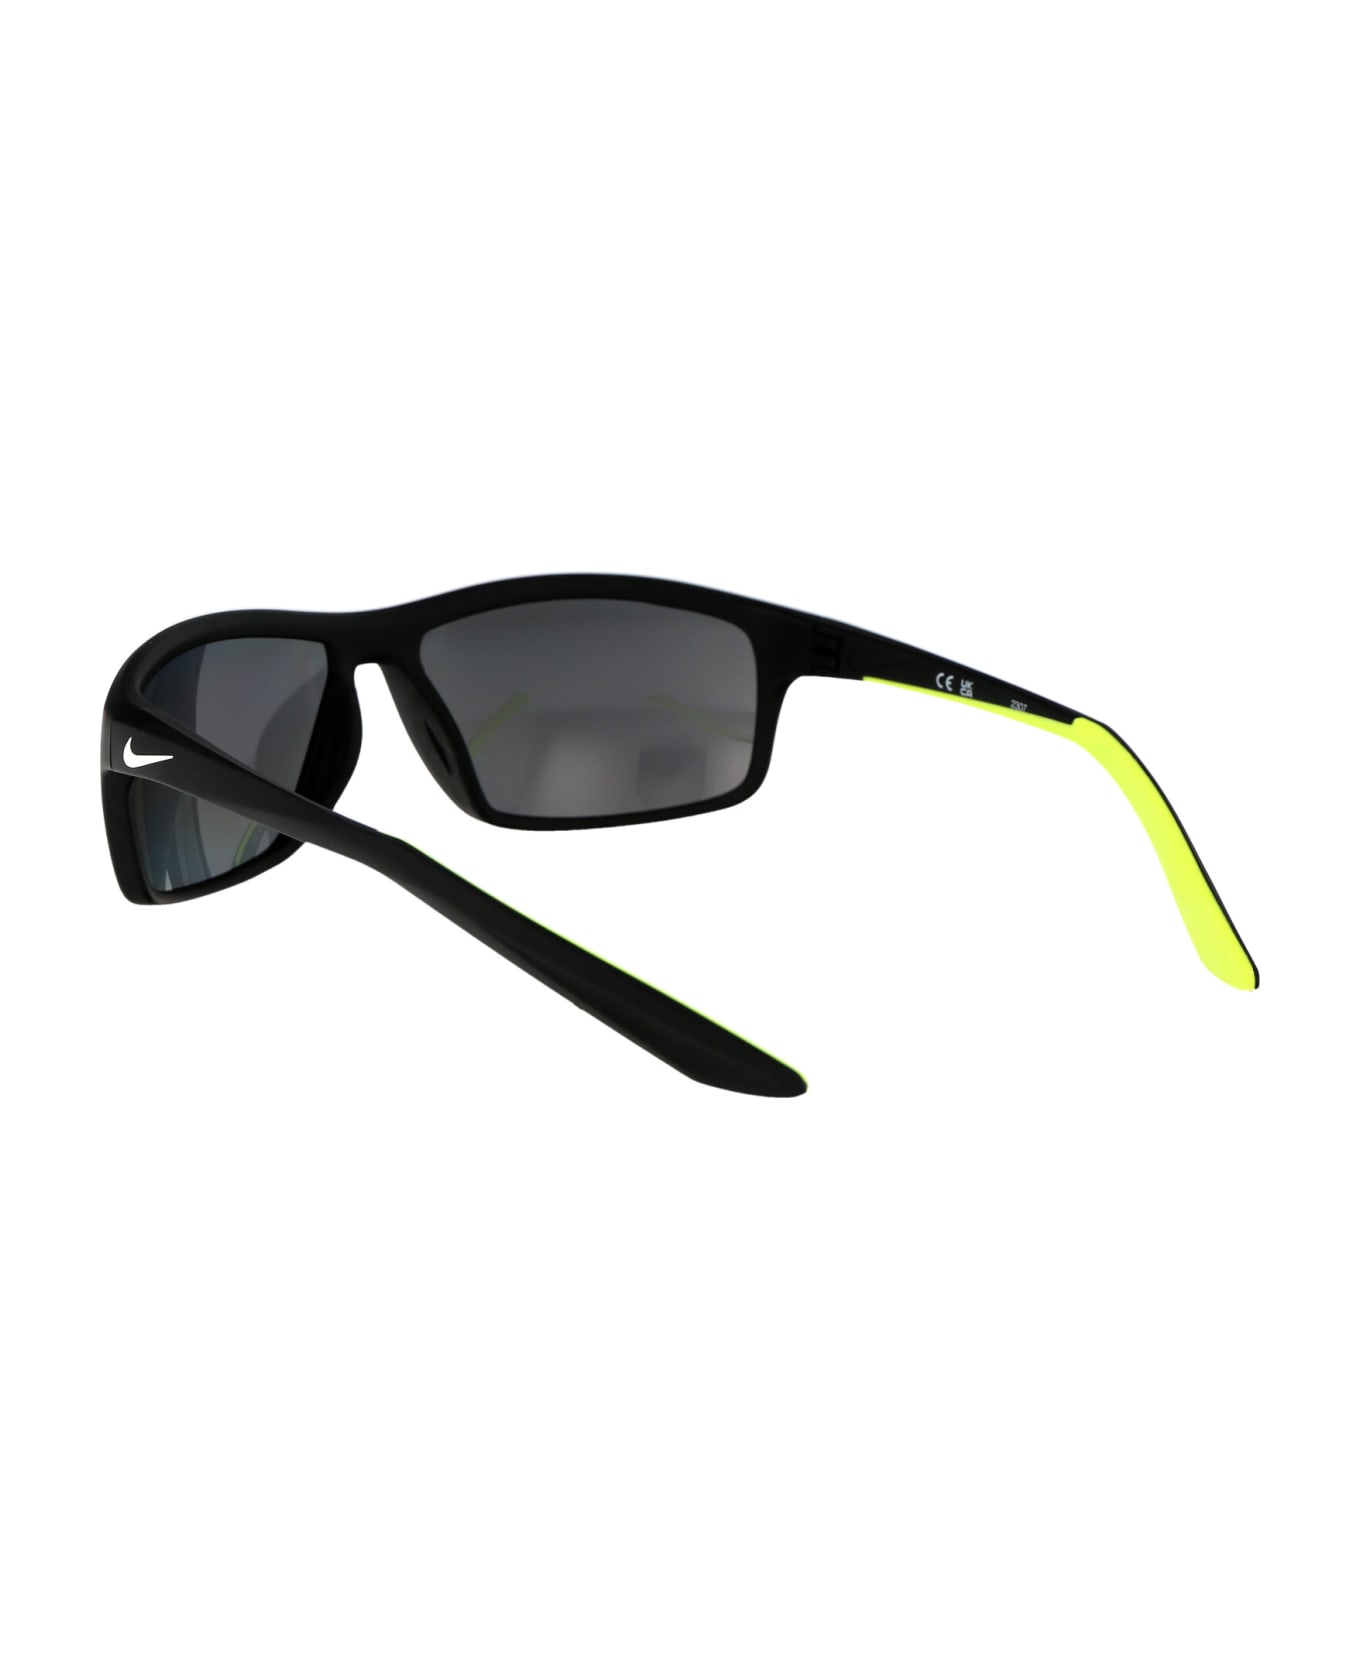 Nike Adrenaline 22 Sunglasses - 011 GRET W/ SILVER FLASH サングラス